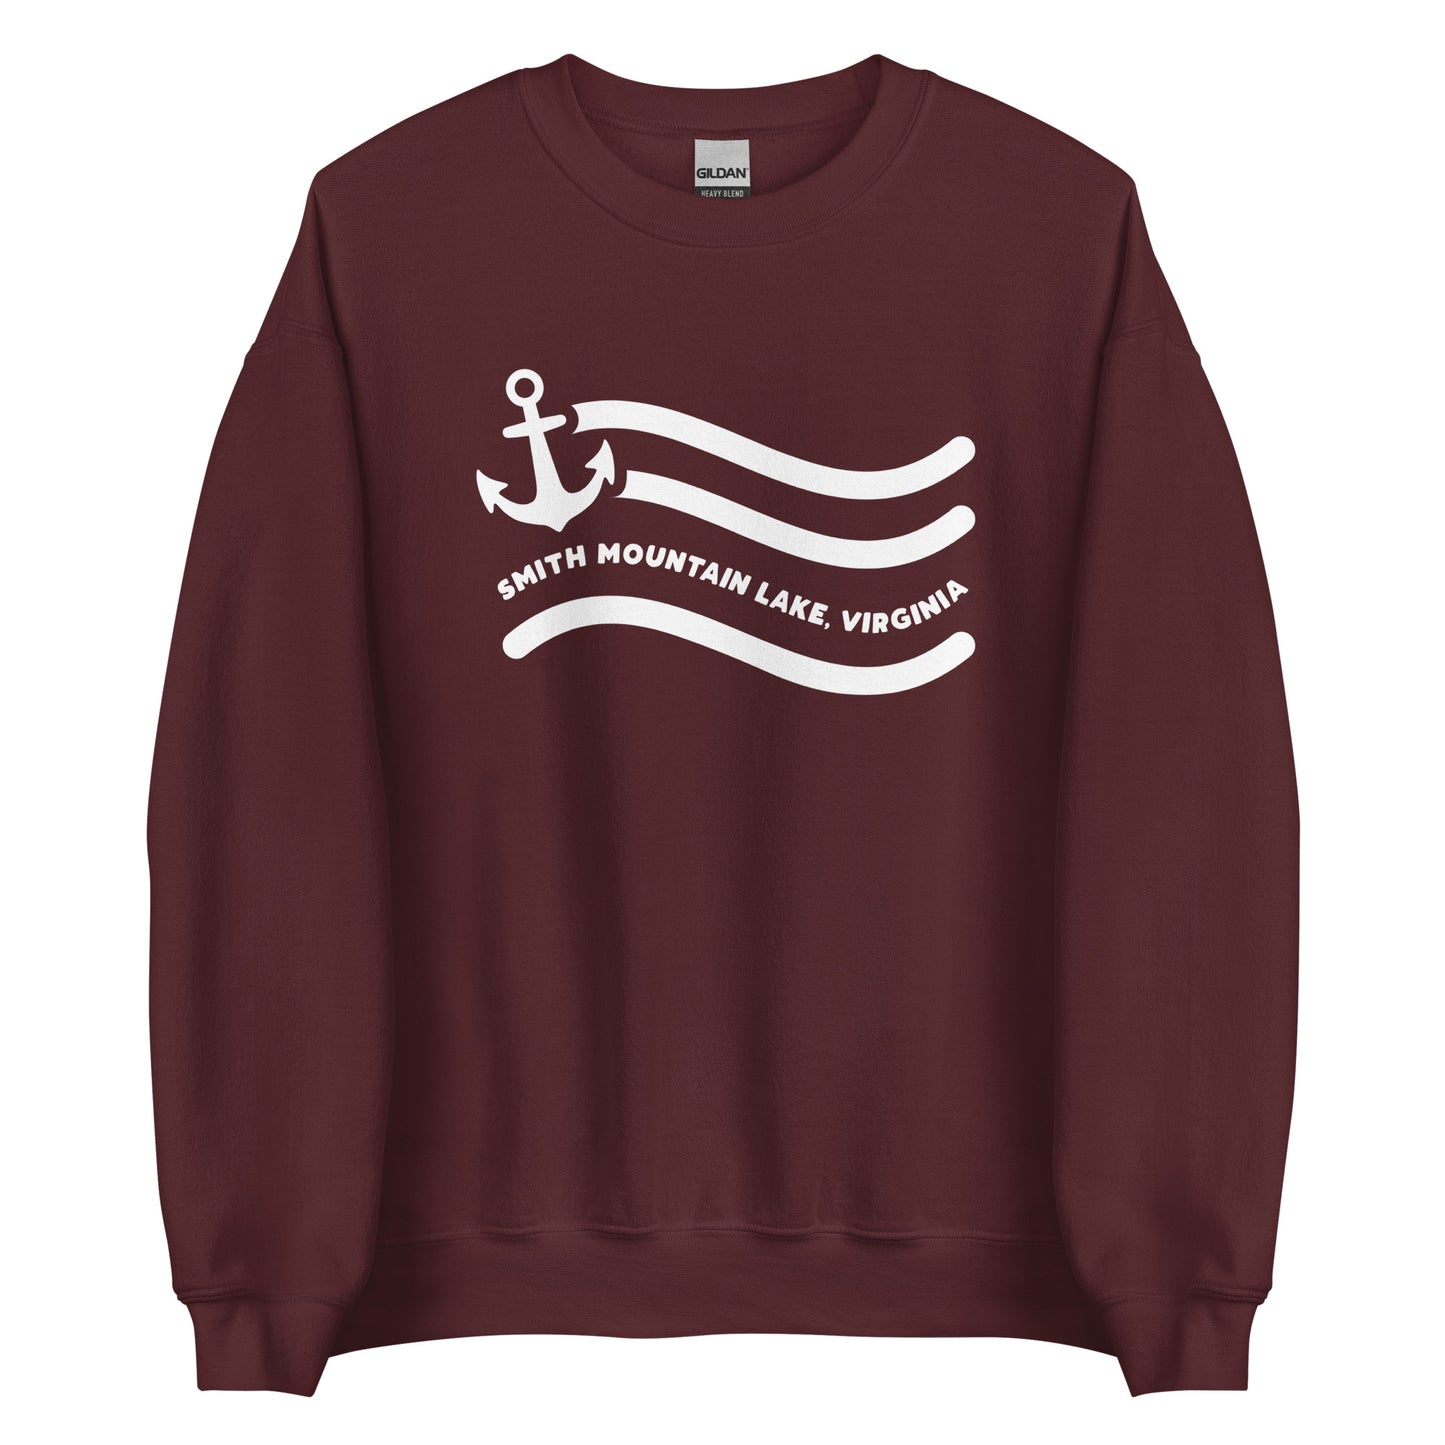 Smith Mountain Lake Virginia Anchor + Waves Unisex Crewneck Sweatshirt